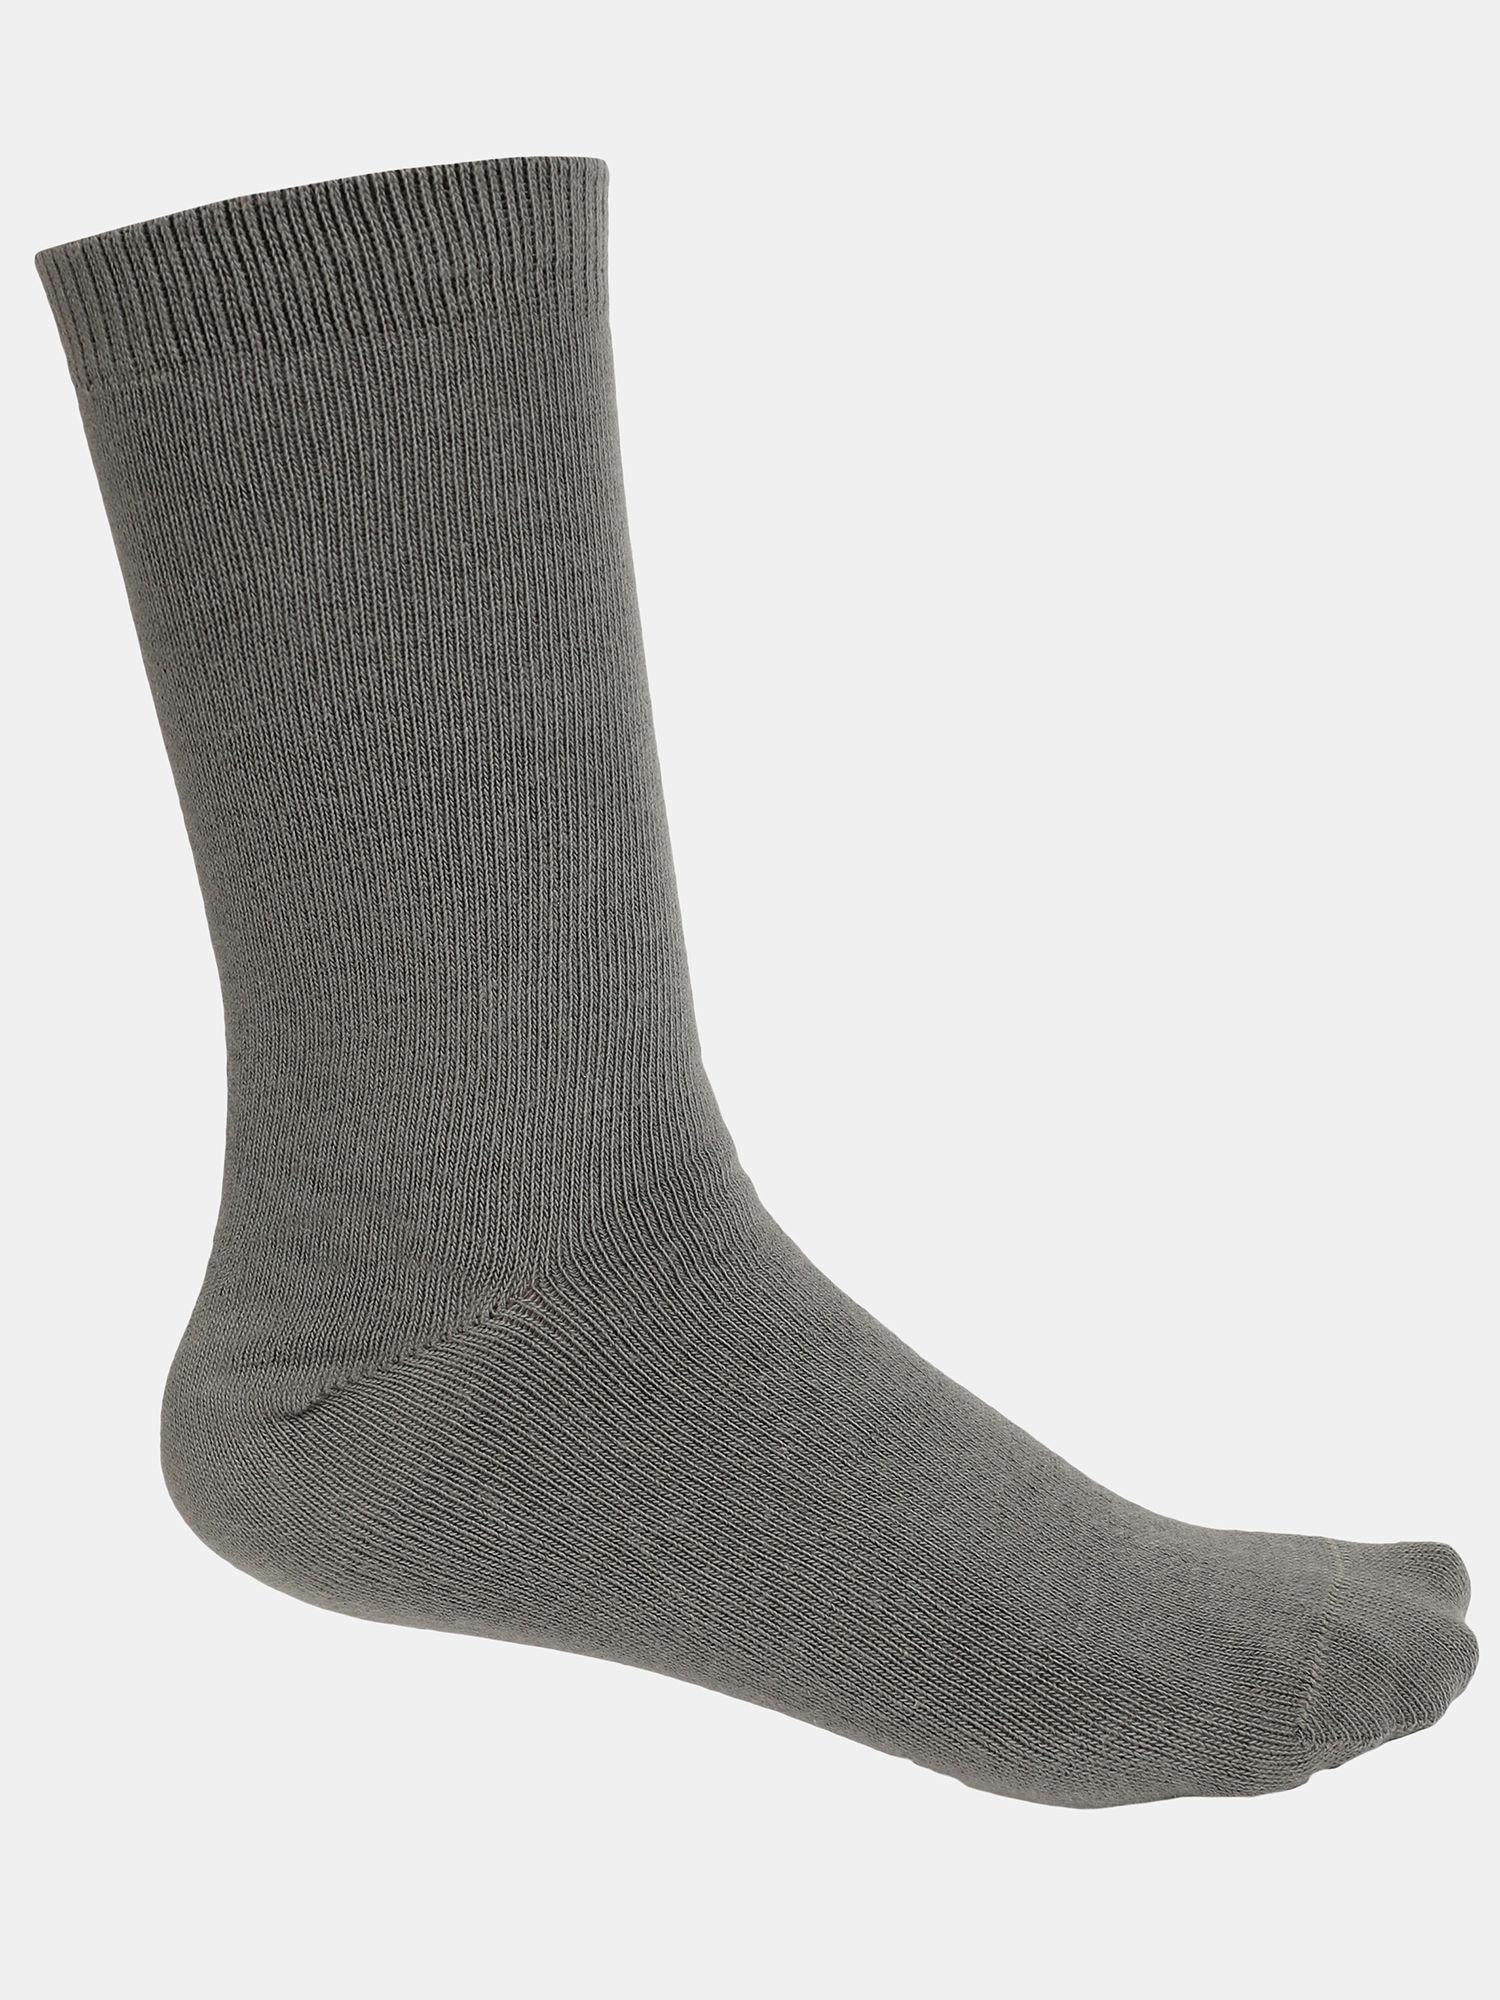 7800 Unisex Cotton Nylon Stretch Calf Length Socks - Gunmetal Grey